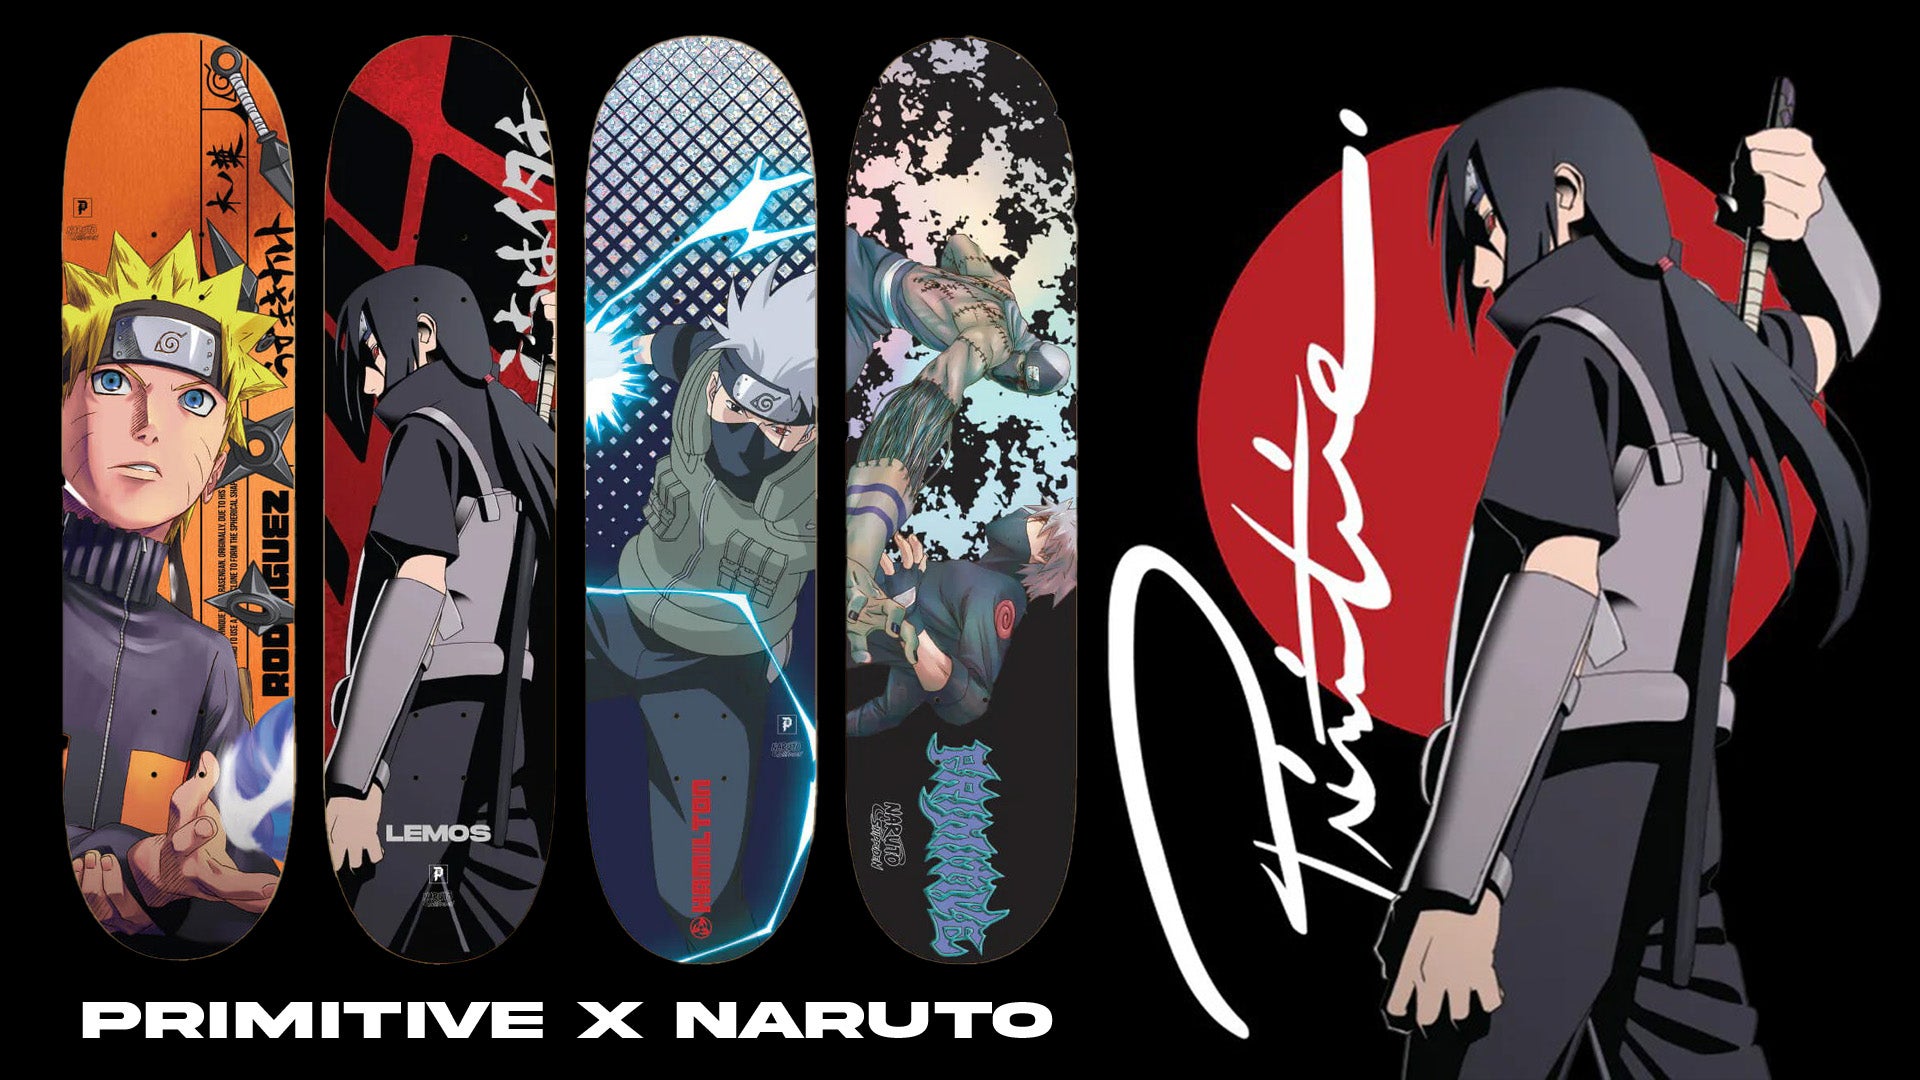 Naruto Orochimaru Anime x Primitive Skateboarding Brand Collab Shirt Size M  | eBay